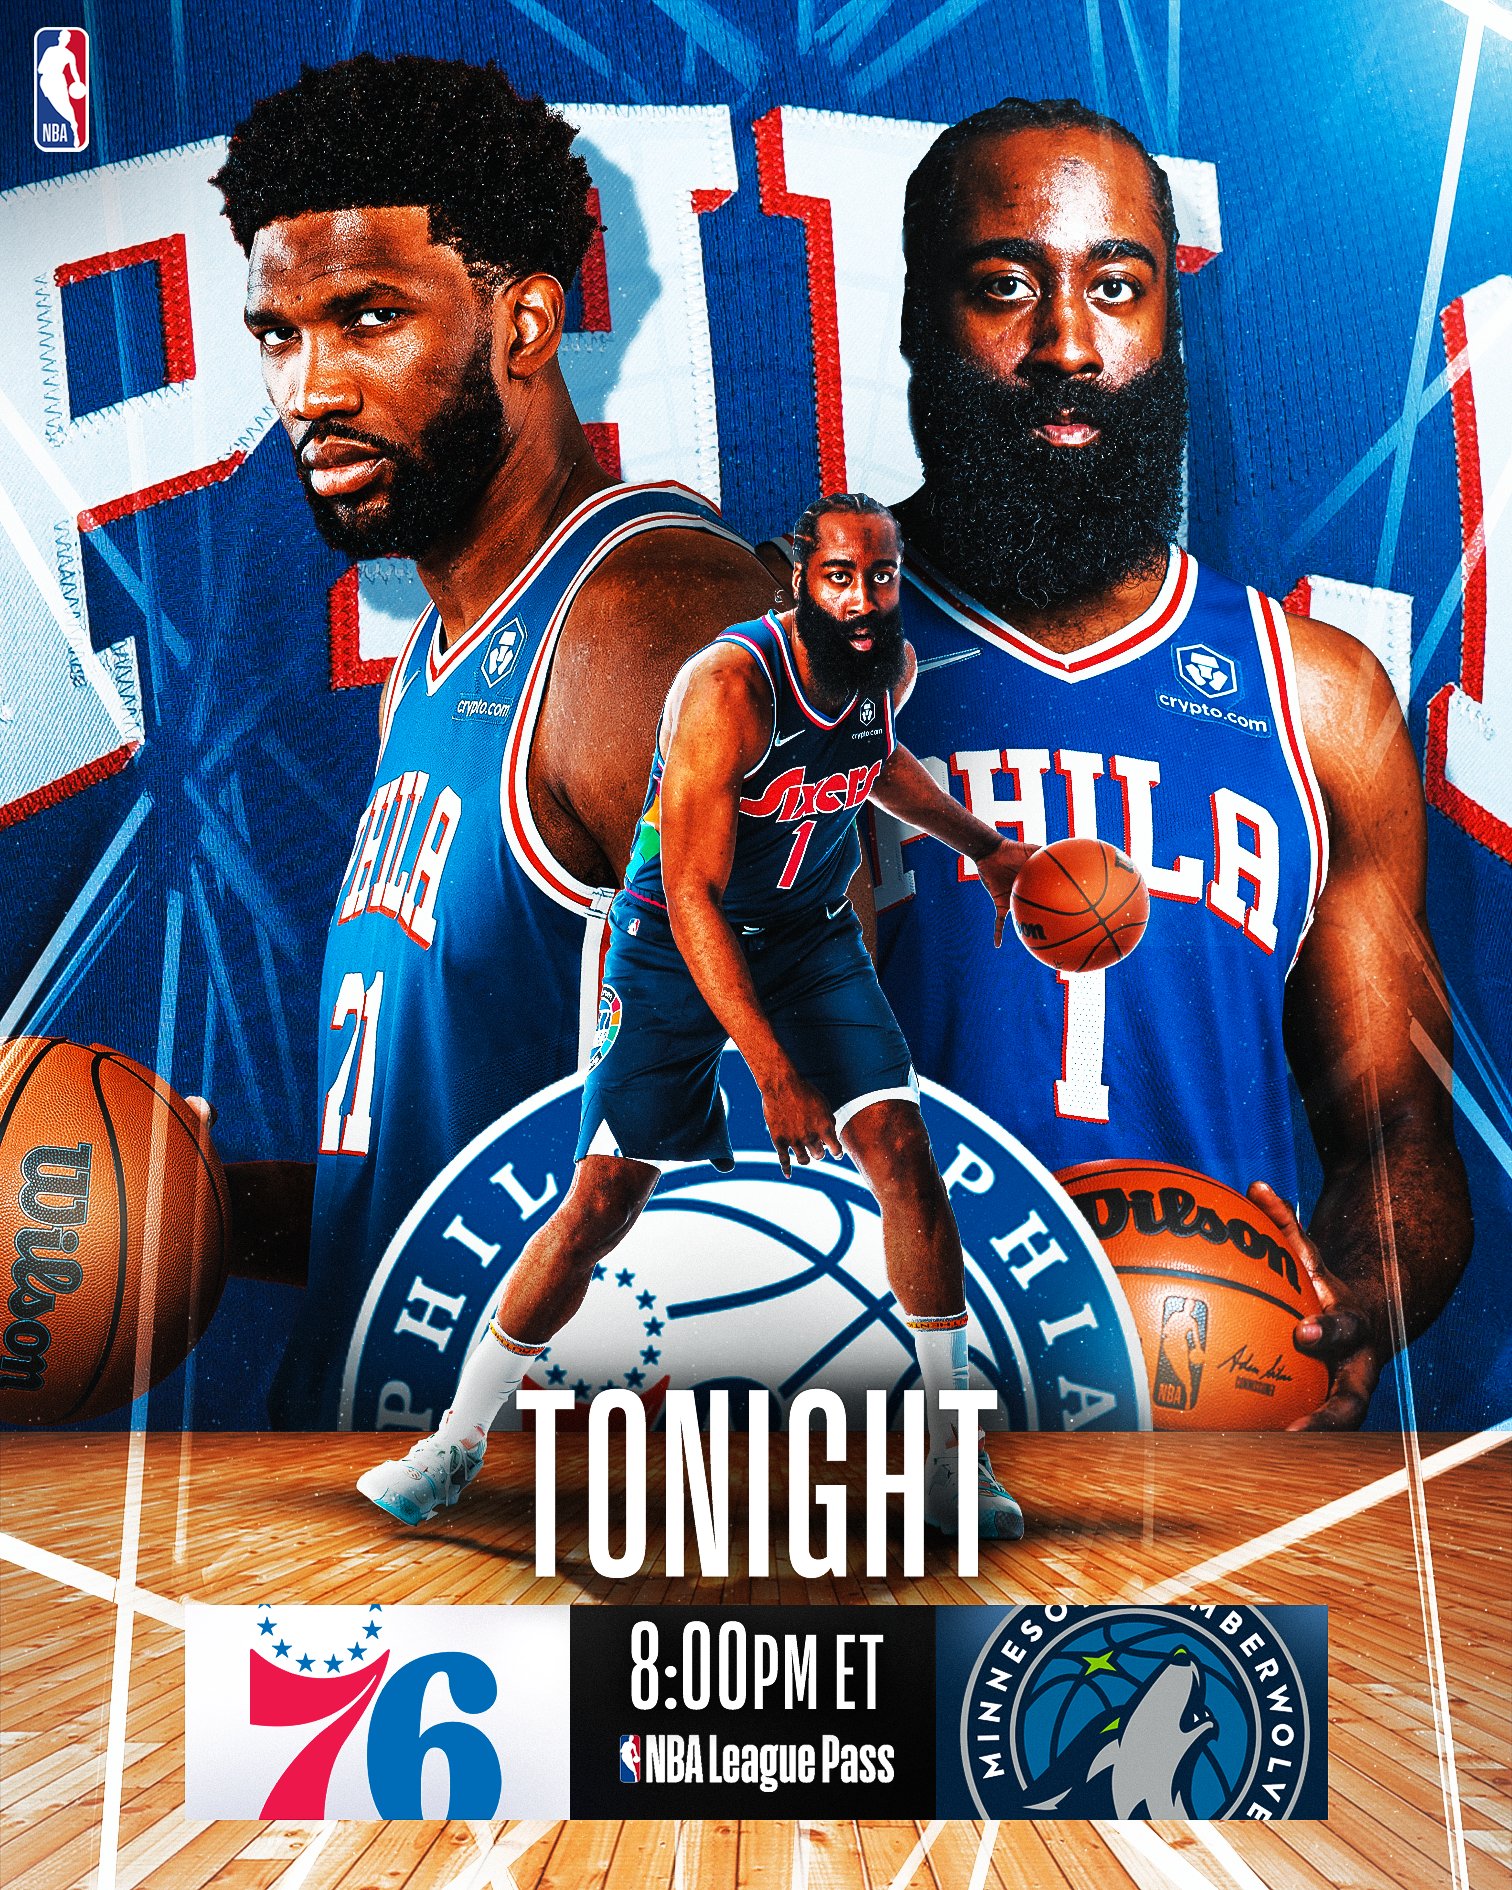 NBA - TONIGHT on NBA League Pass at 7:30pm/et, Jimmy